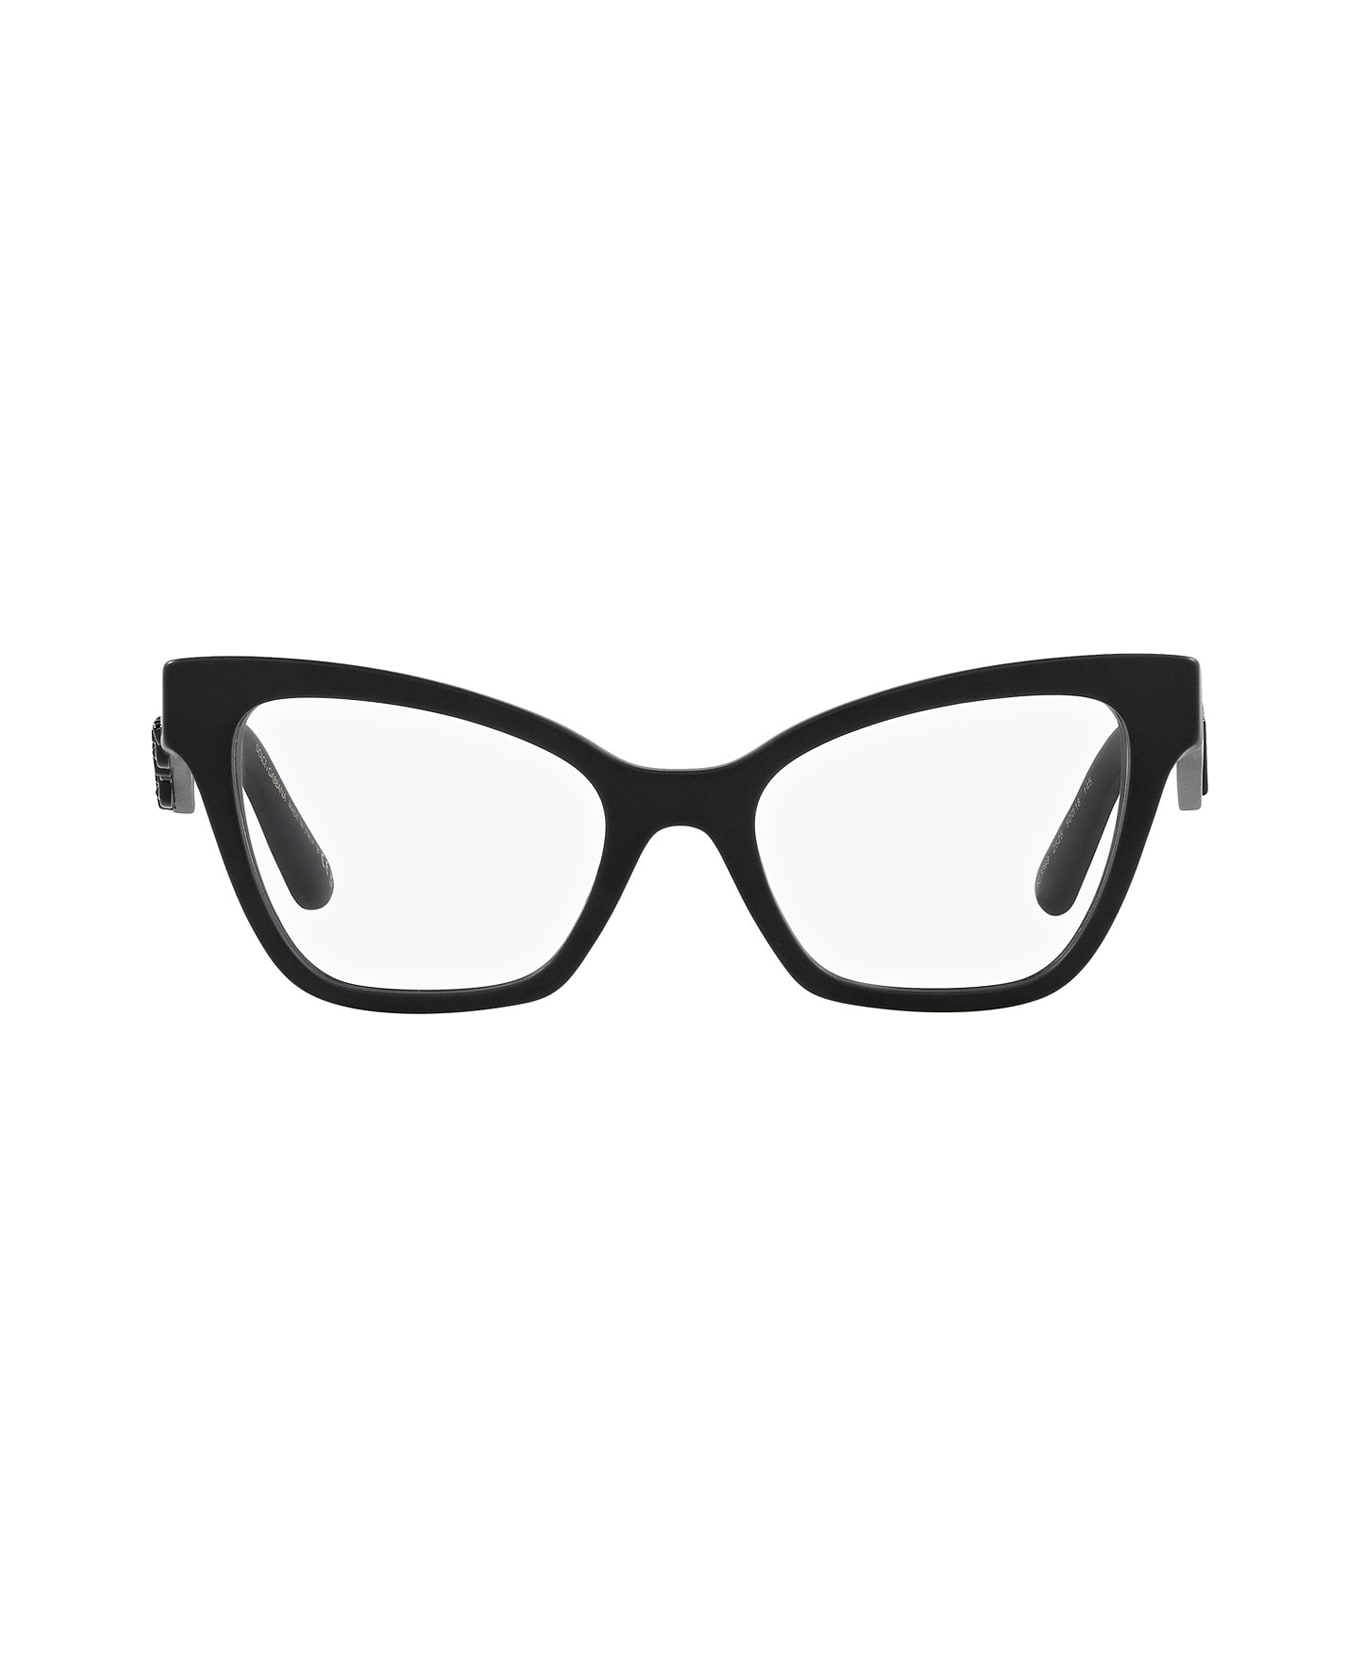 Dolce & Gabbana Eyewear Dg3369 2525 Glasses - Nero アイウェア